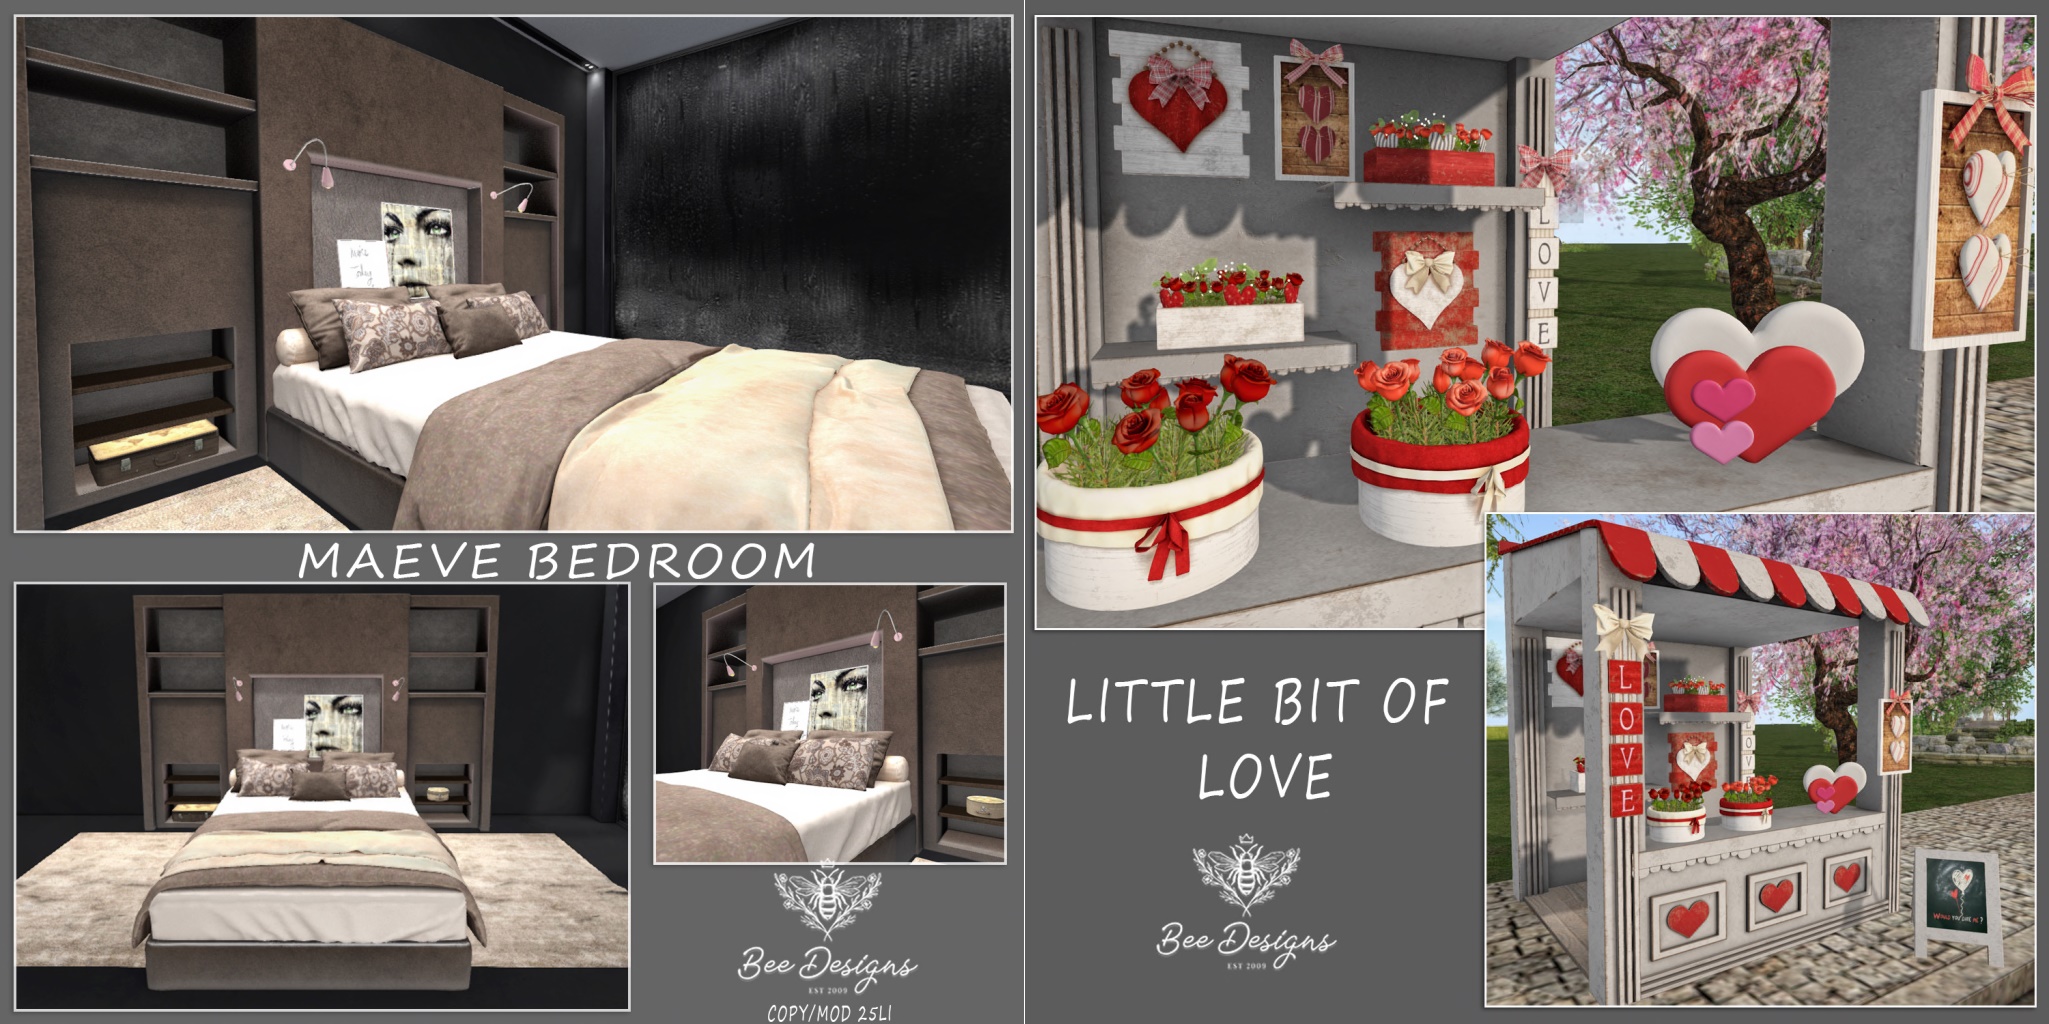 Bee Designs – Maeve Bedroom and Little bit of Love